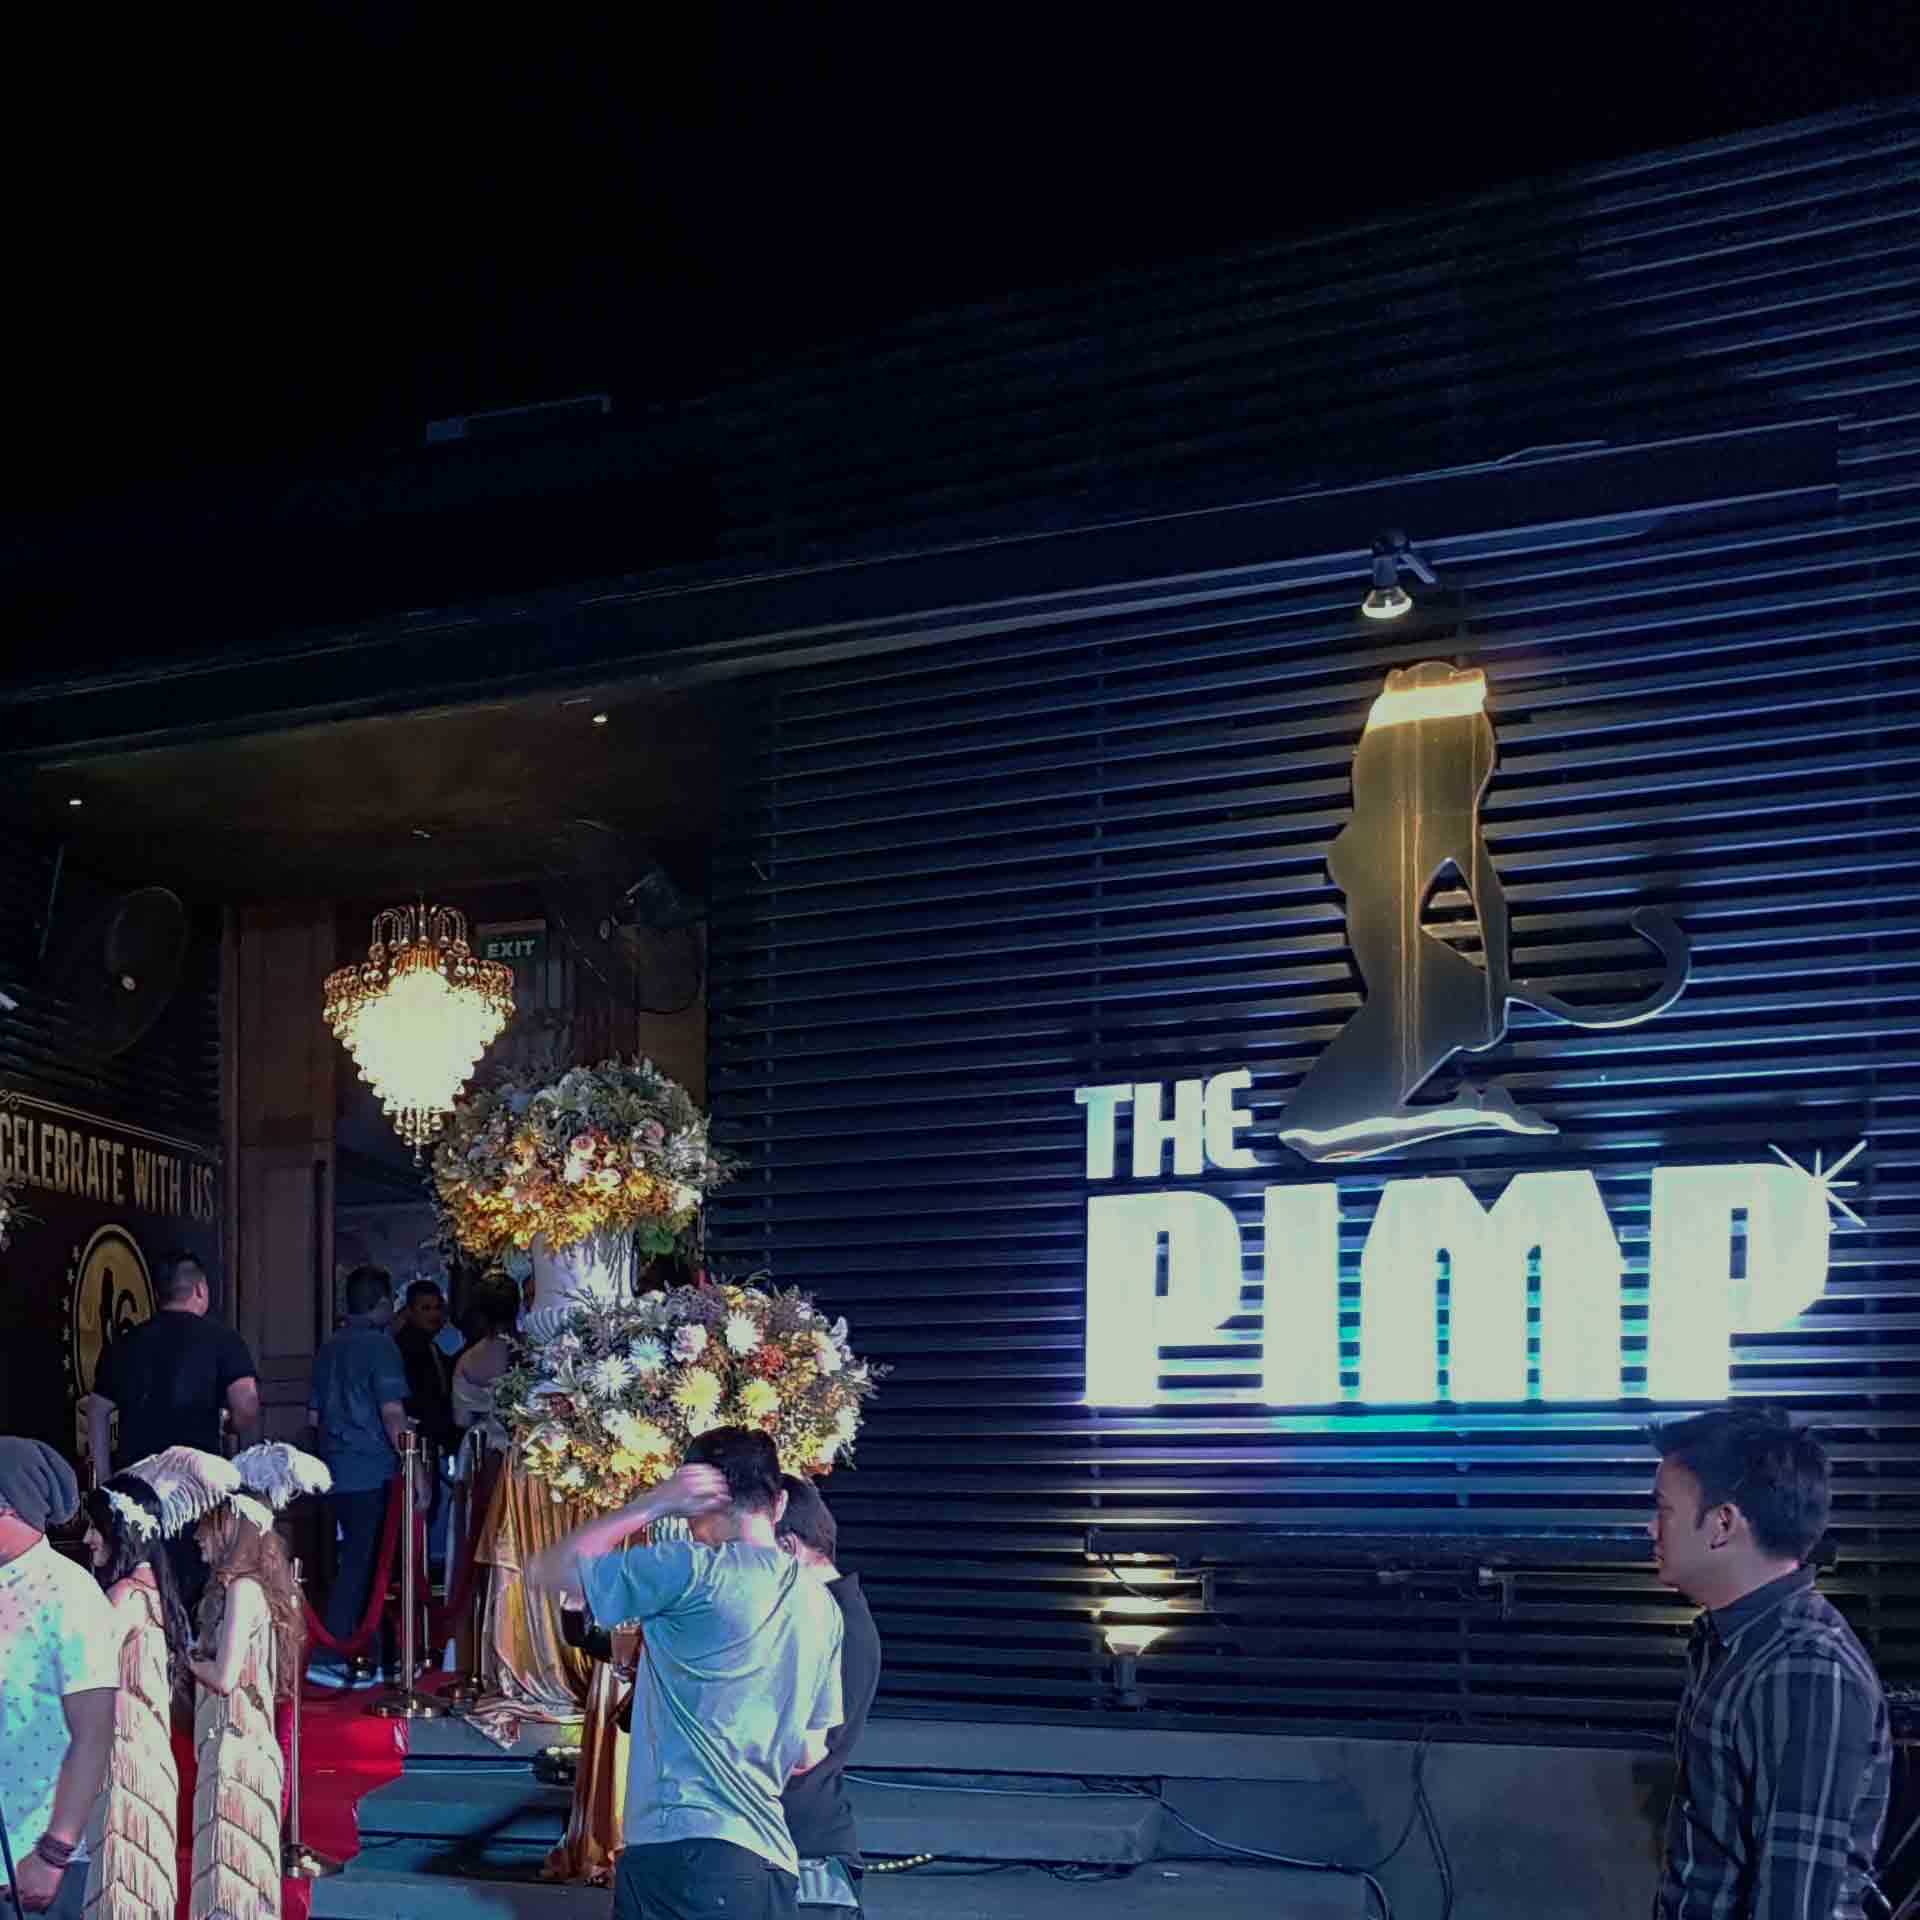 The PIMP